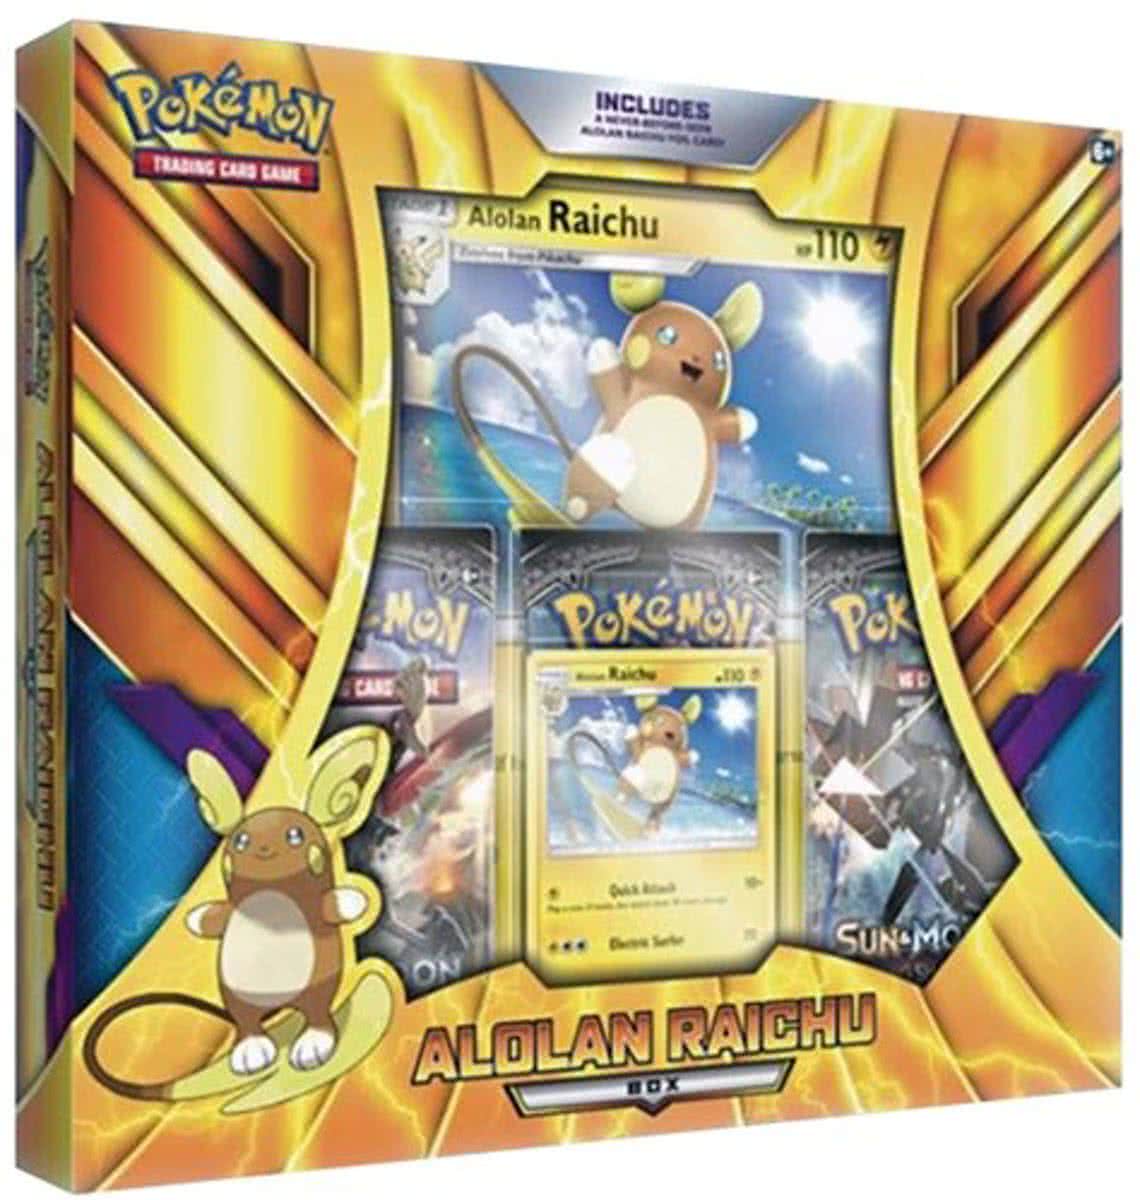 Pokemon Collection Box: Alolan Raichu  (Pokemon), The Pokemon Company